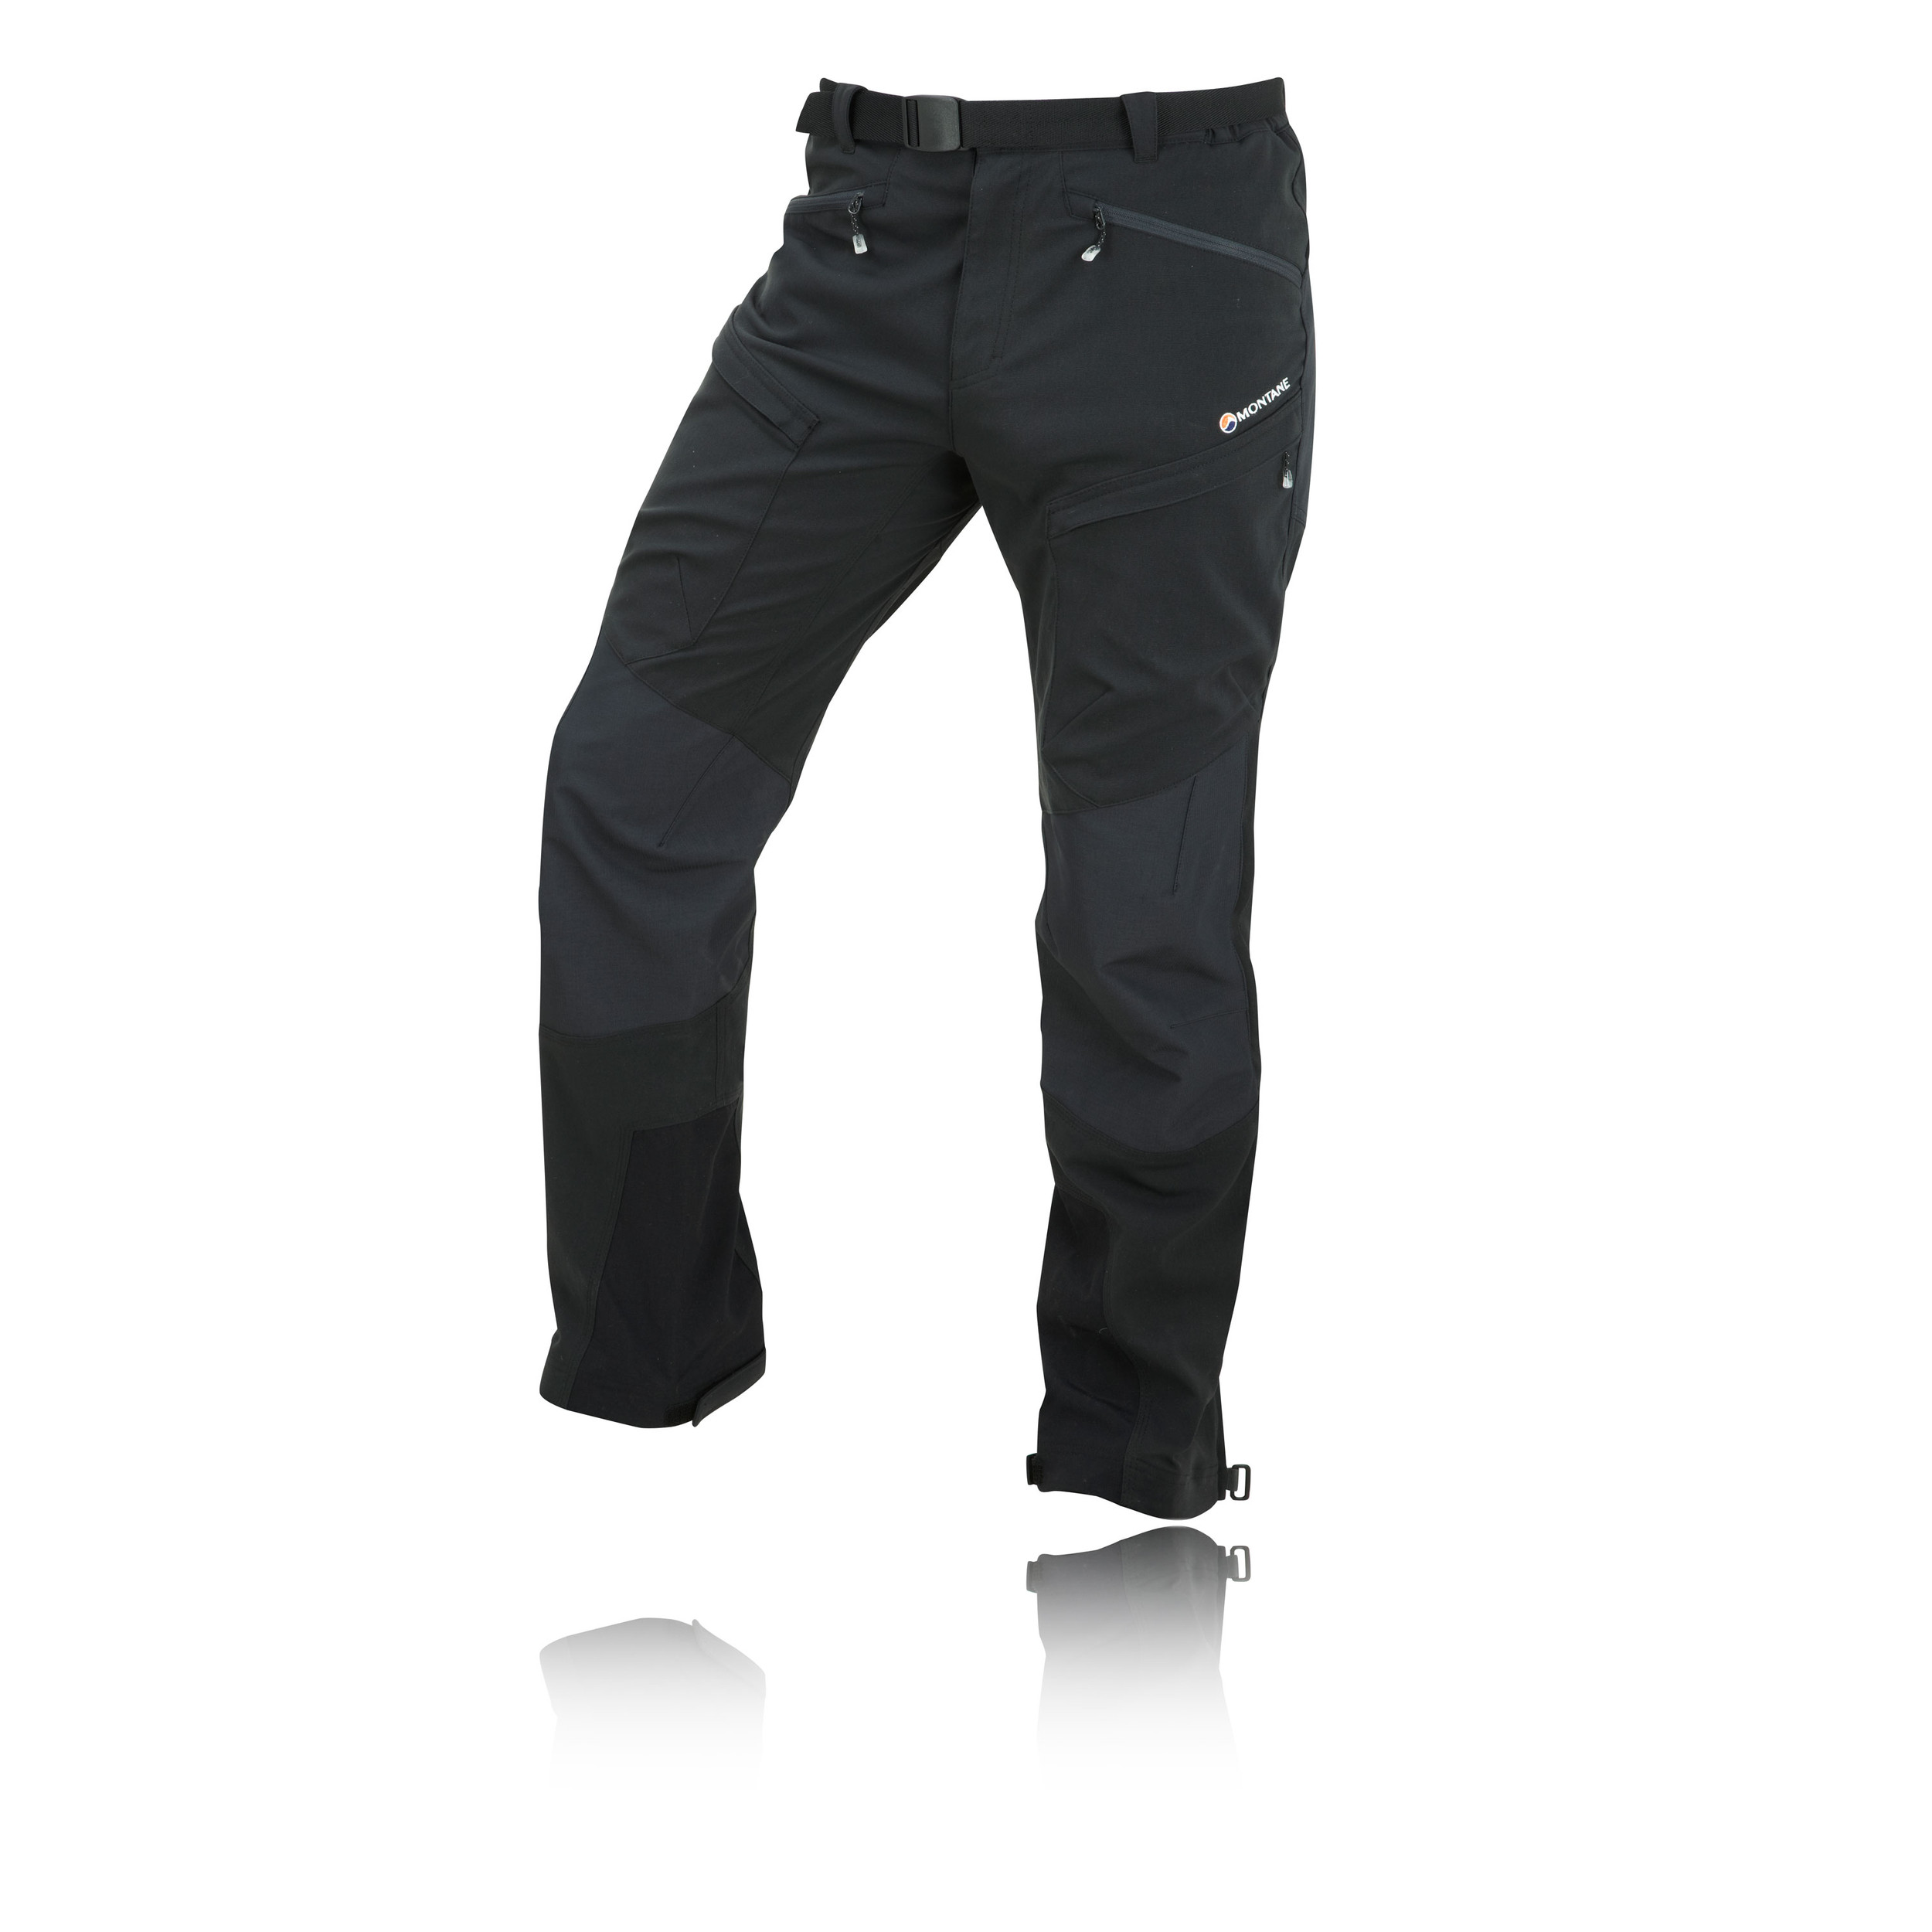 Montane Super Terra pantalones (Short Leg) - SS21